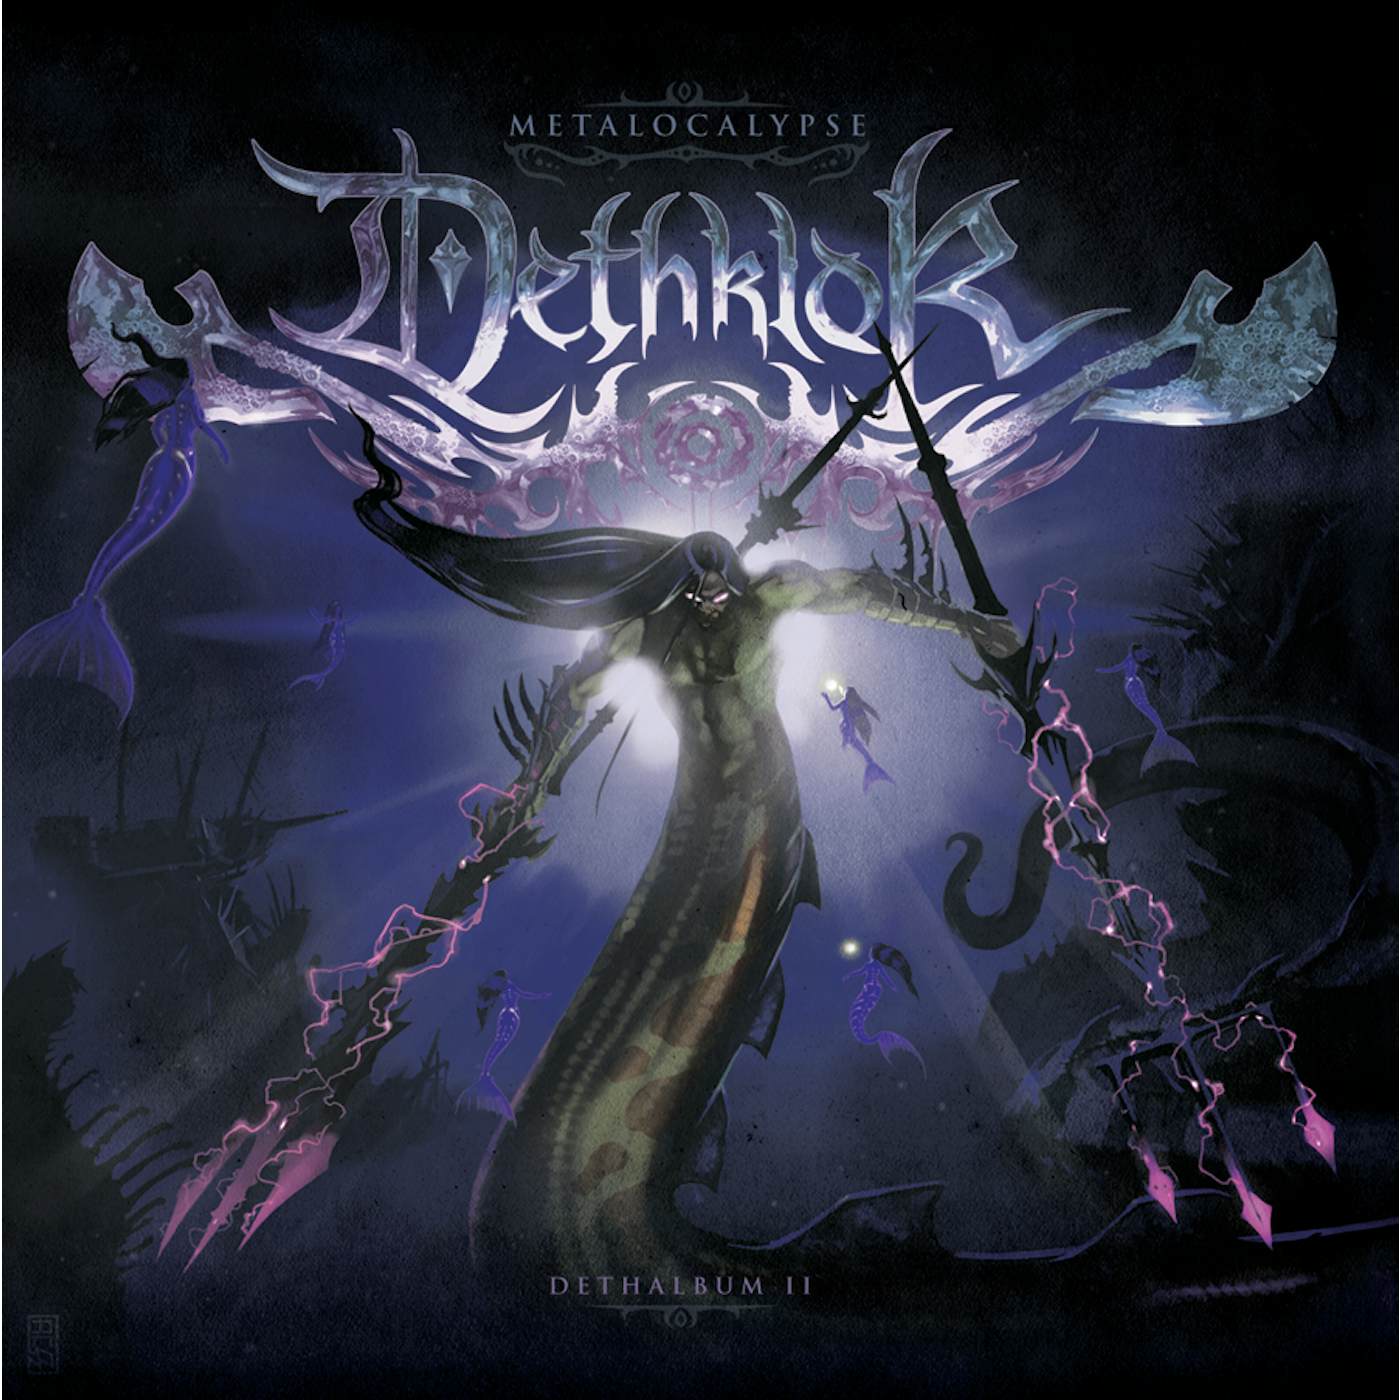 Metalocalypse: Dethklok Dethalbum II Vinyl Record